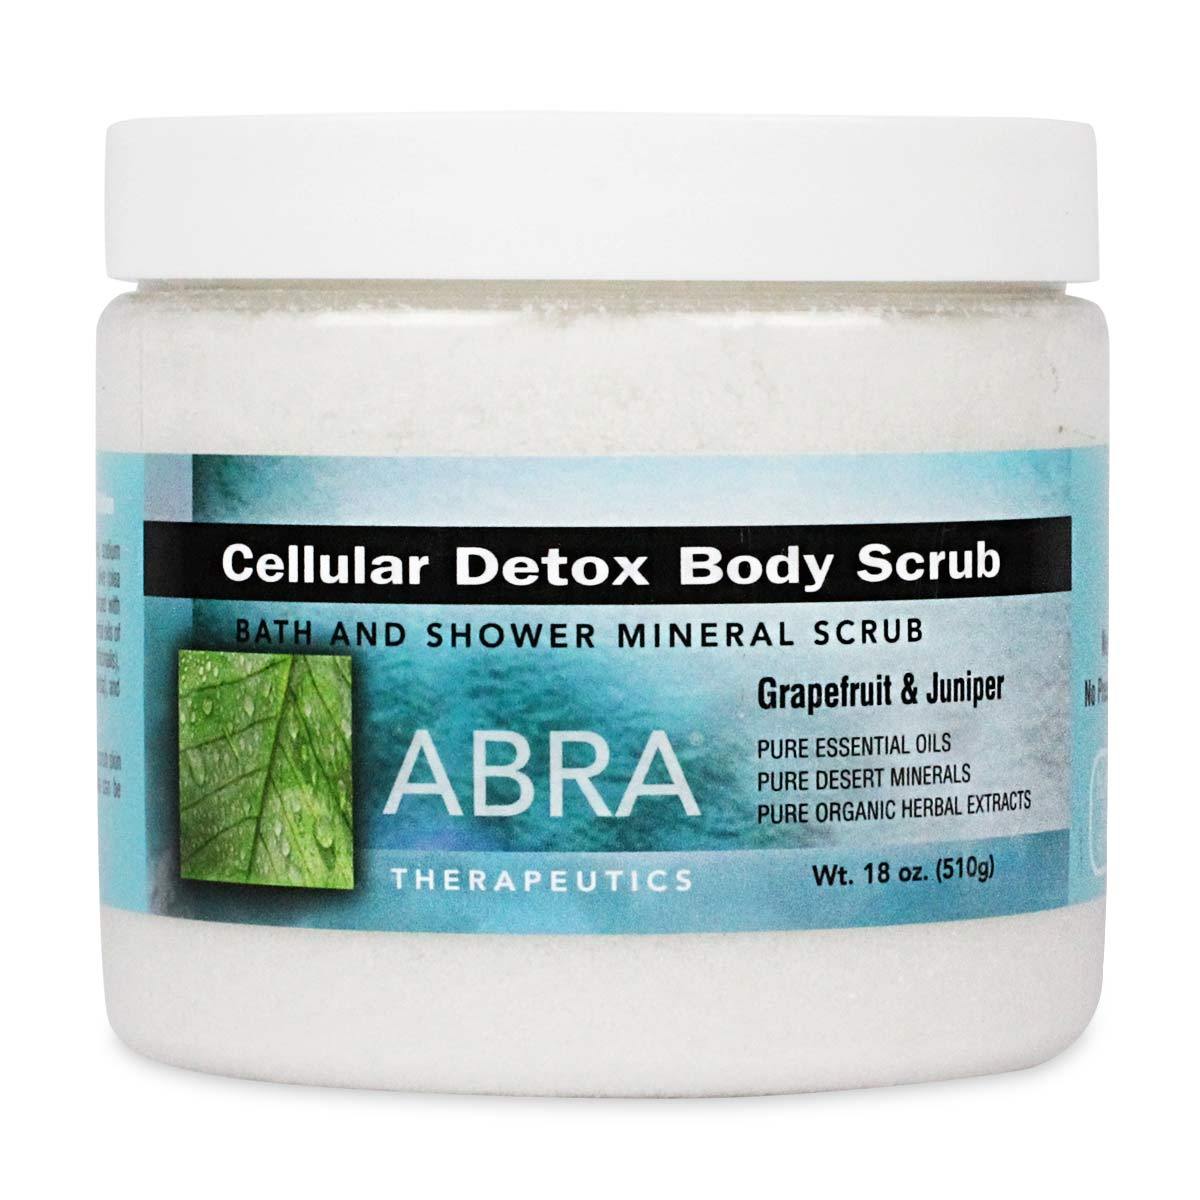 Primary image of Cellular Detox Body Scrub